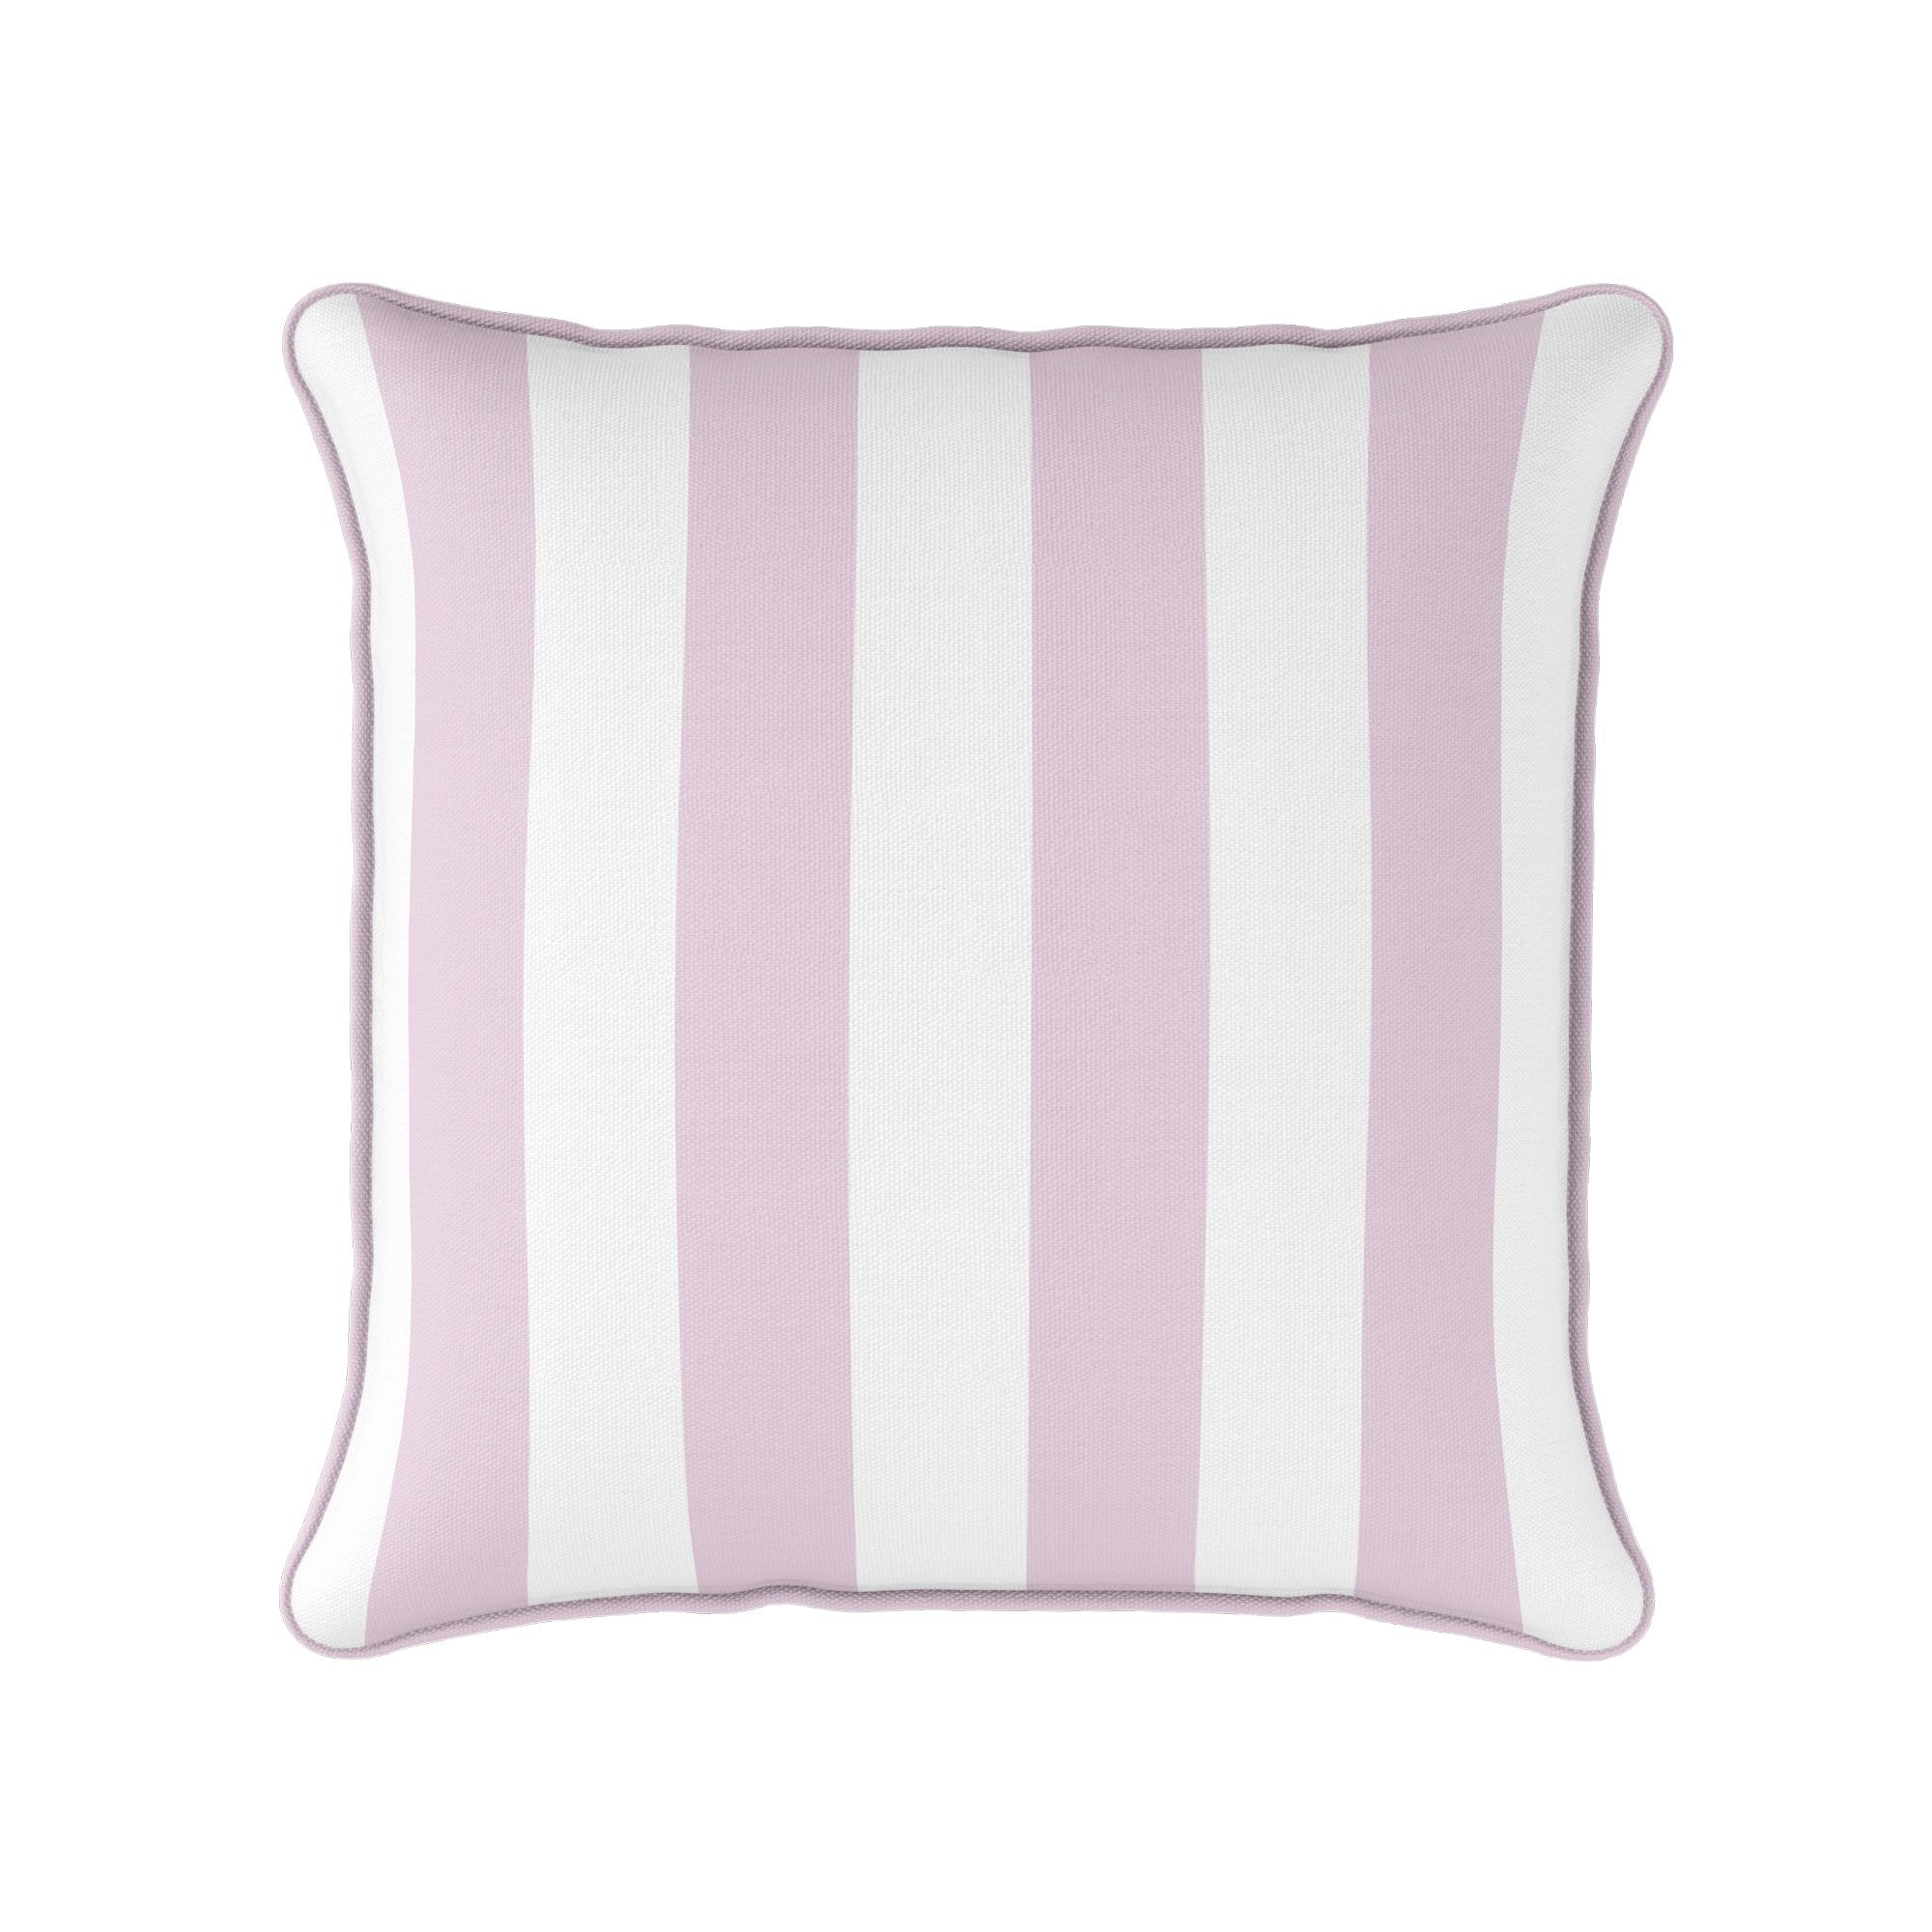 Awning Stripe Cushion - Pinks - Hydrangea Lane Home